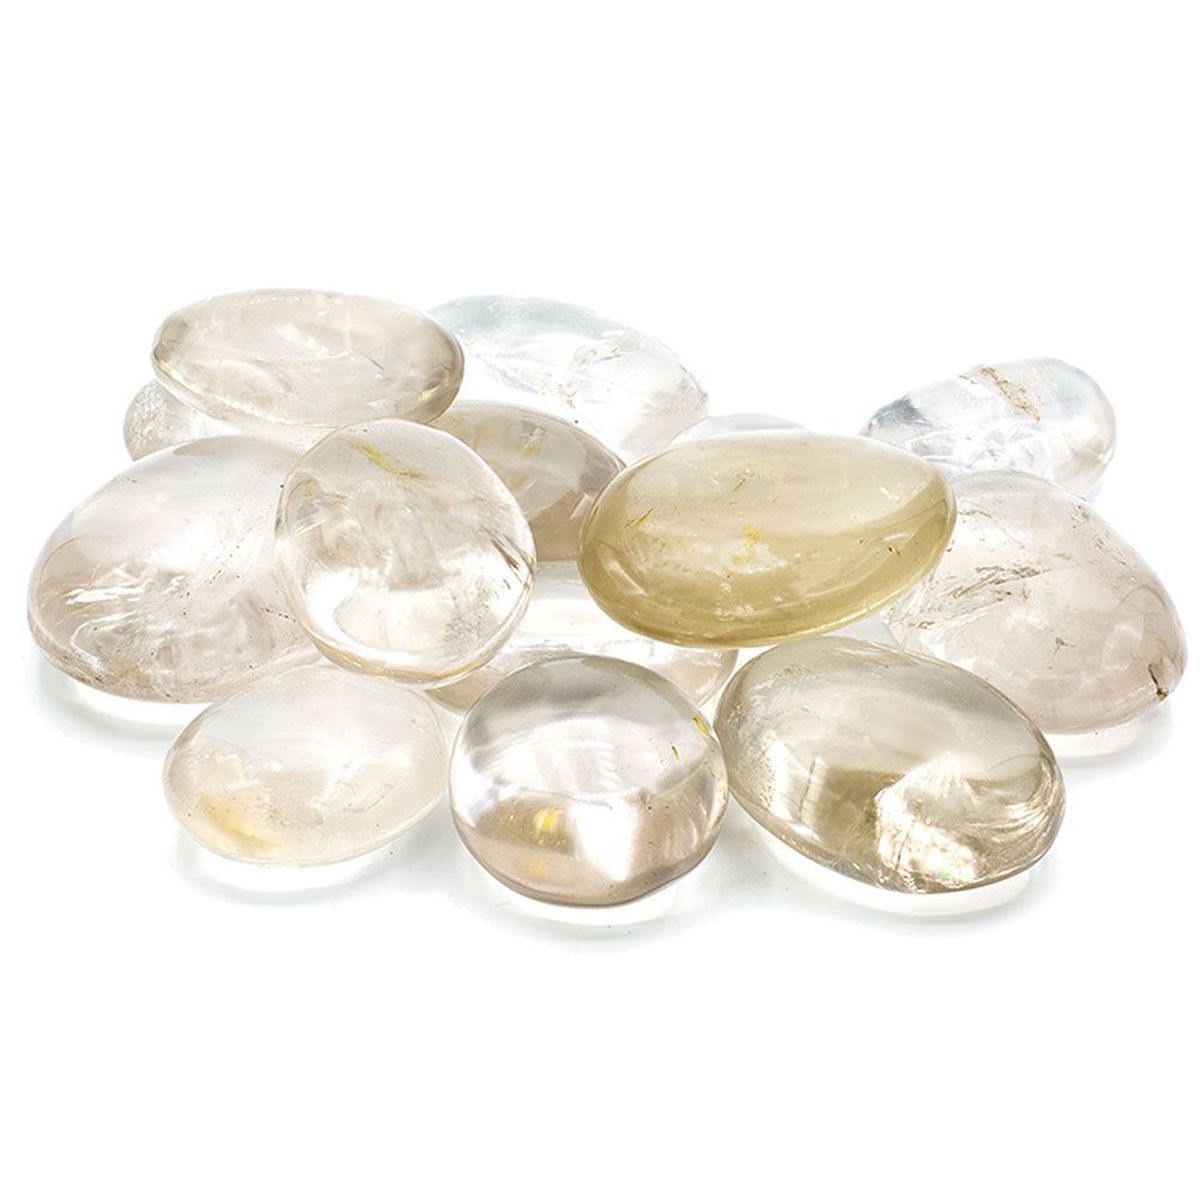 Stones rock crystal 120-130 grams